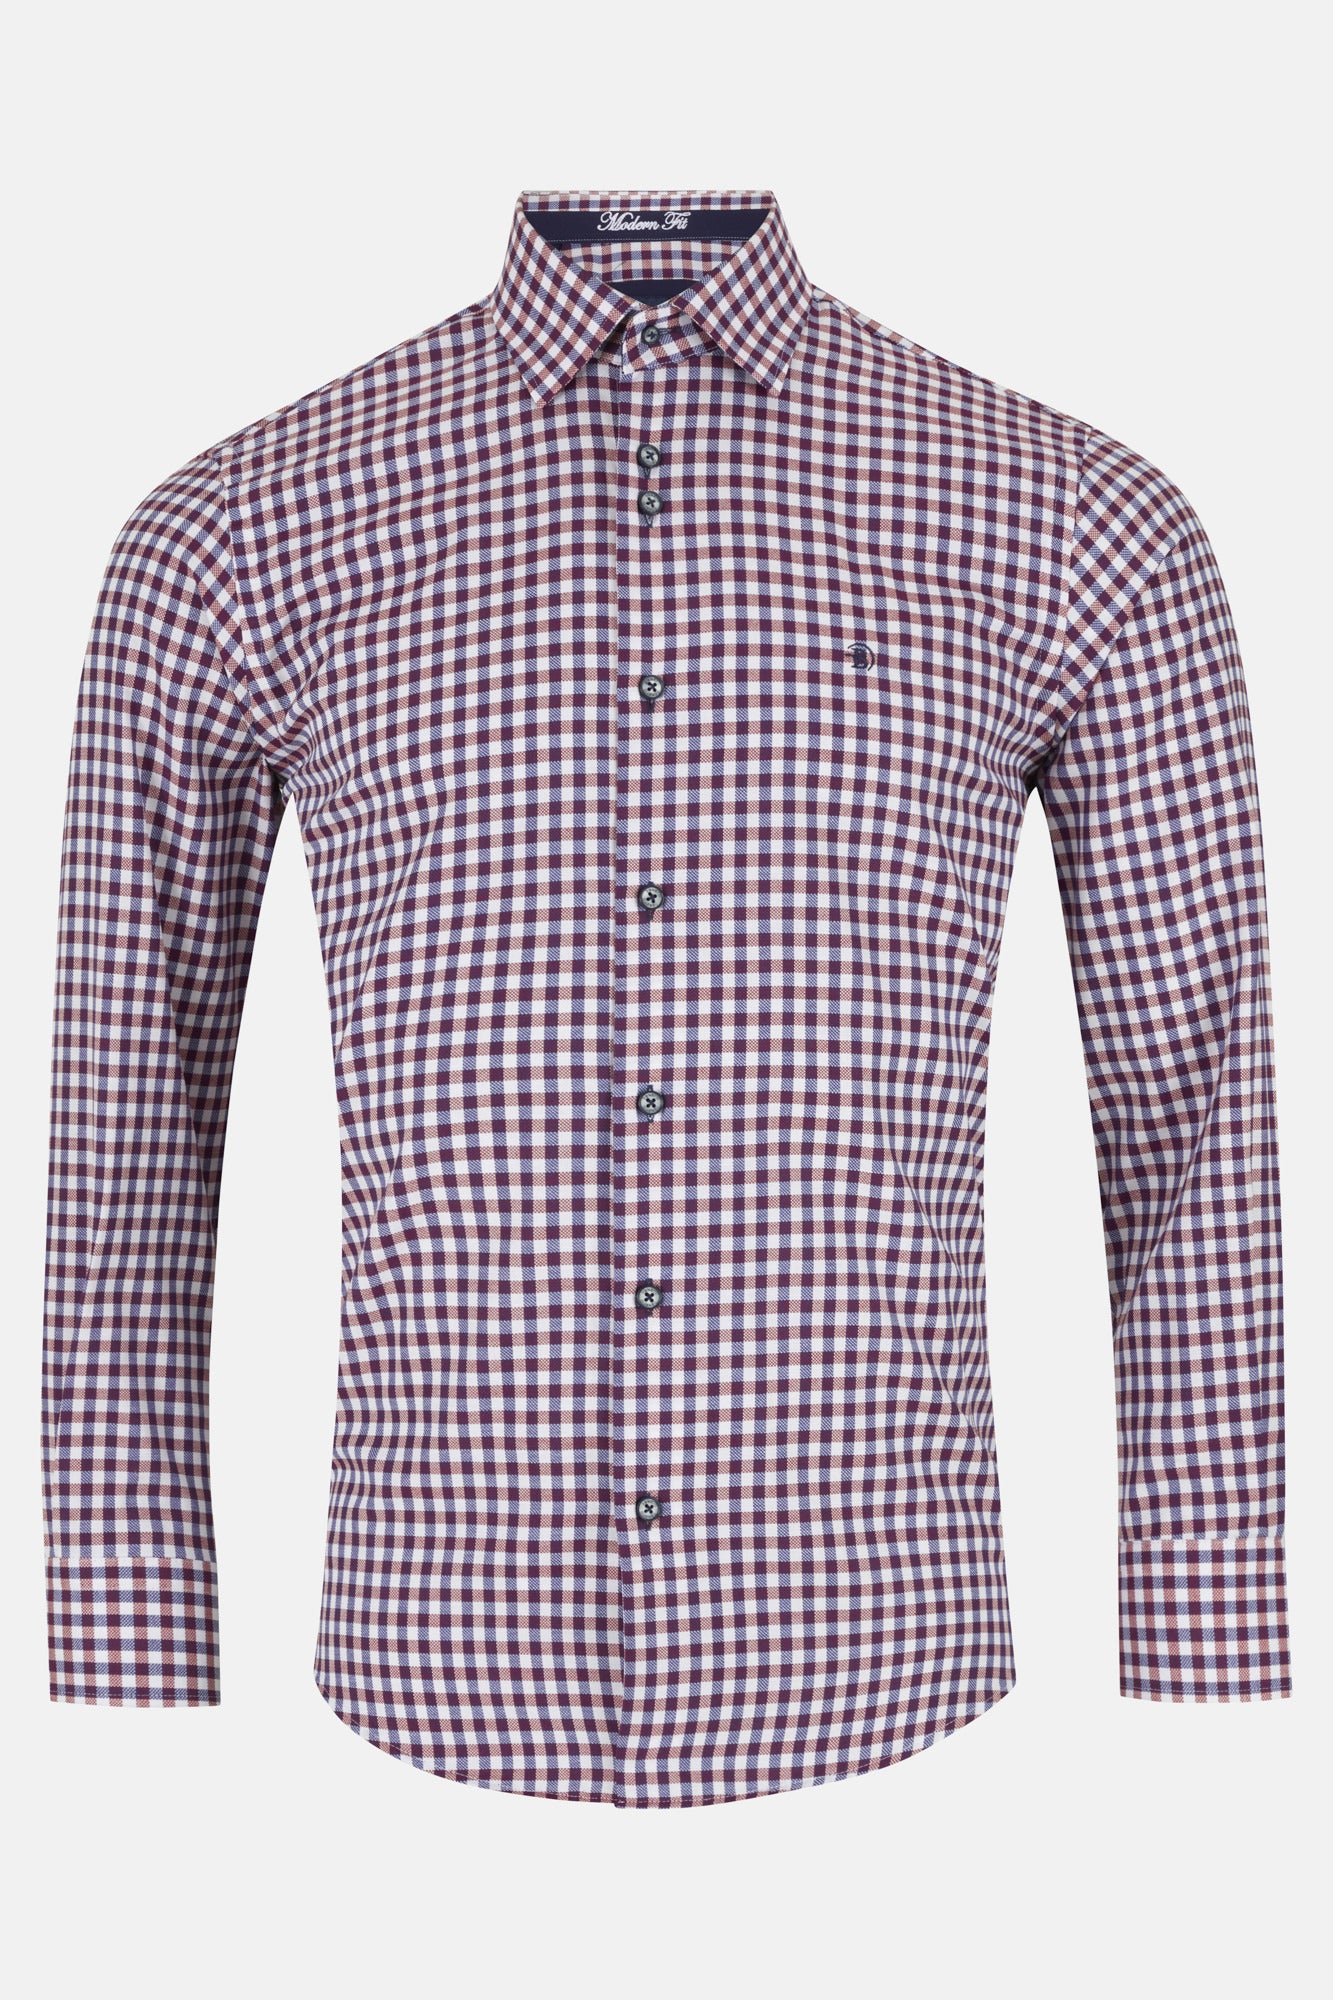 Nick Wine Long Sleeve Shirt By Benetti Menswear 